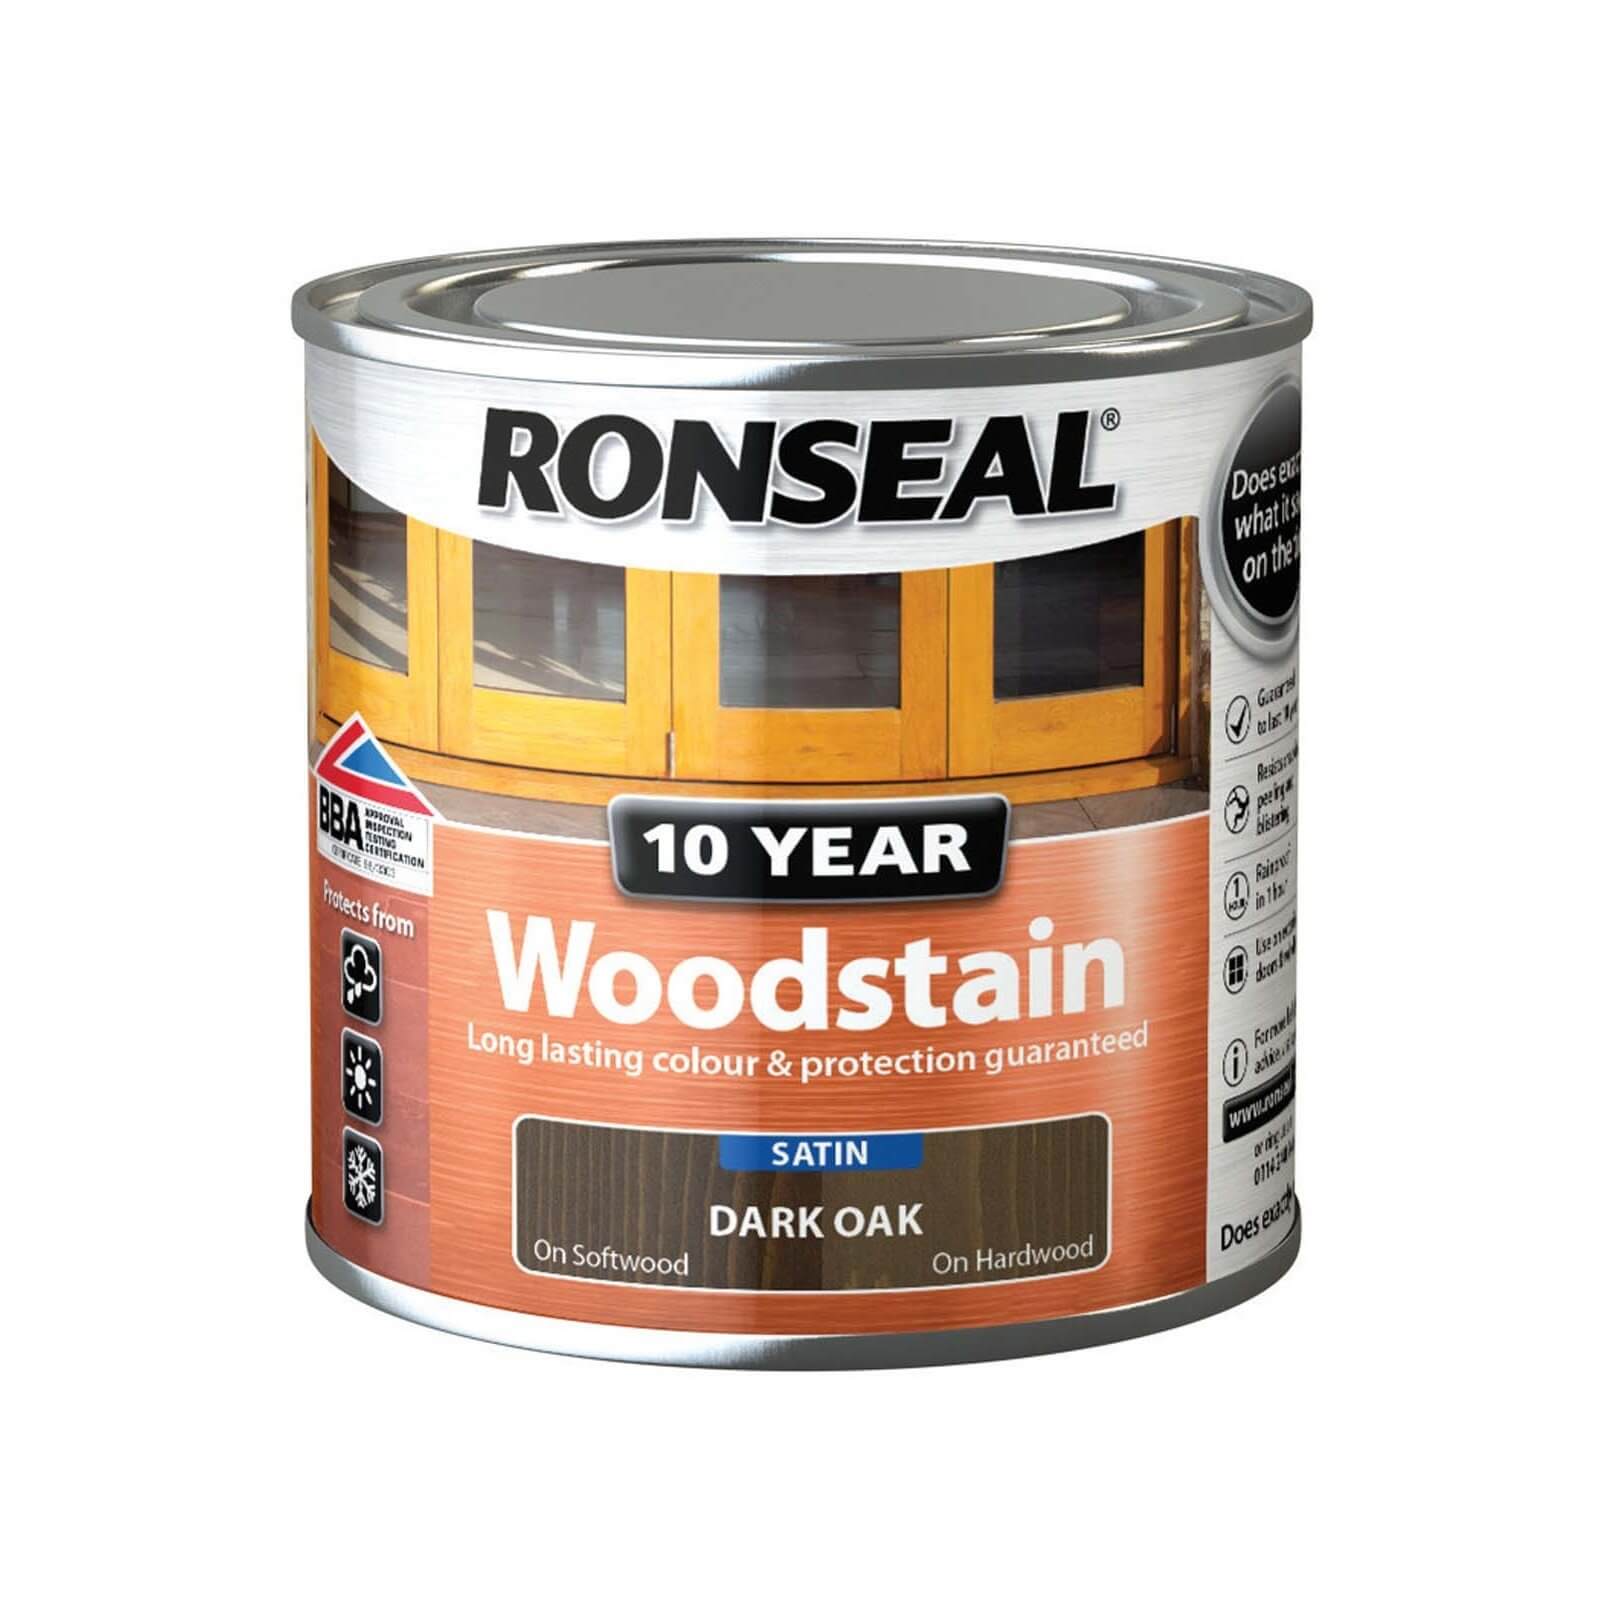 Ronseal 10 Year Woodstain Dark Oak Satin - 250ml